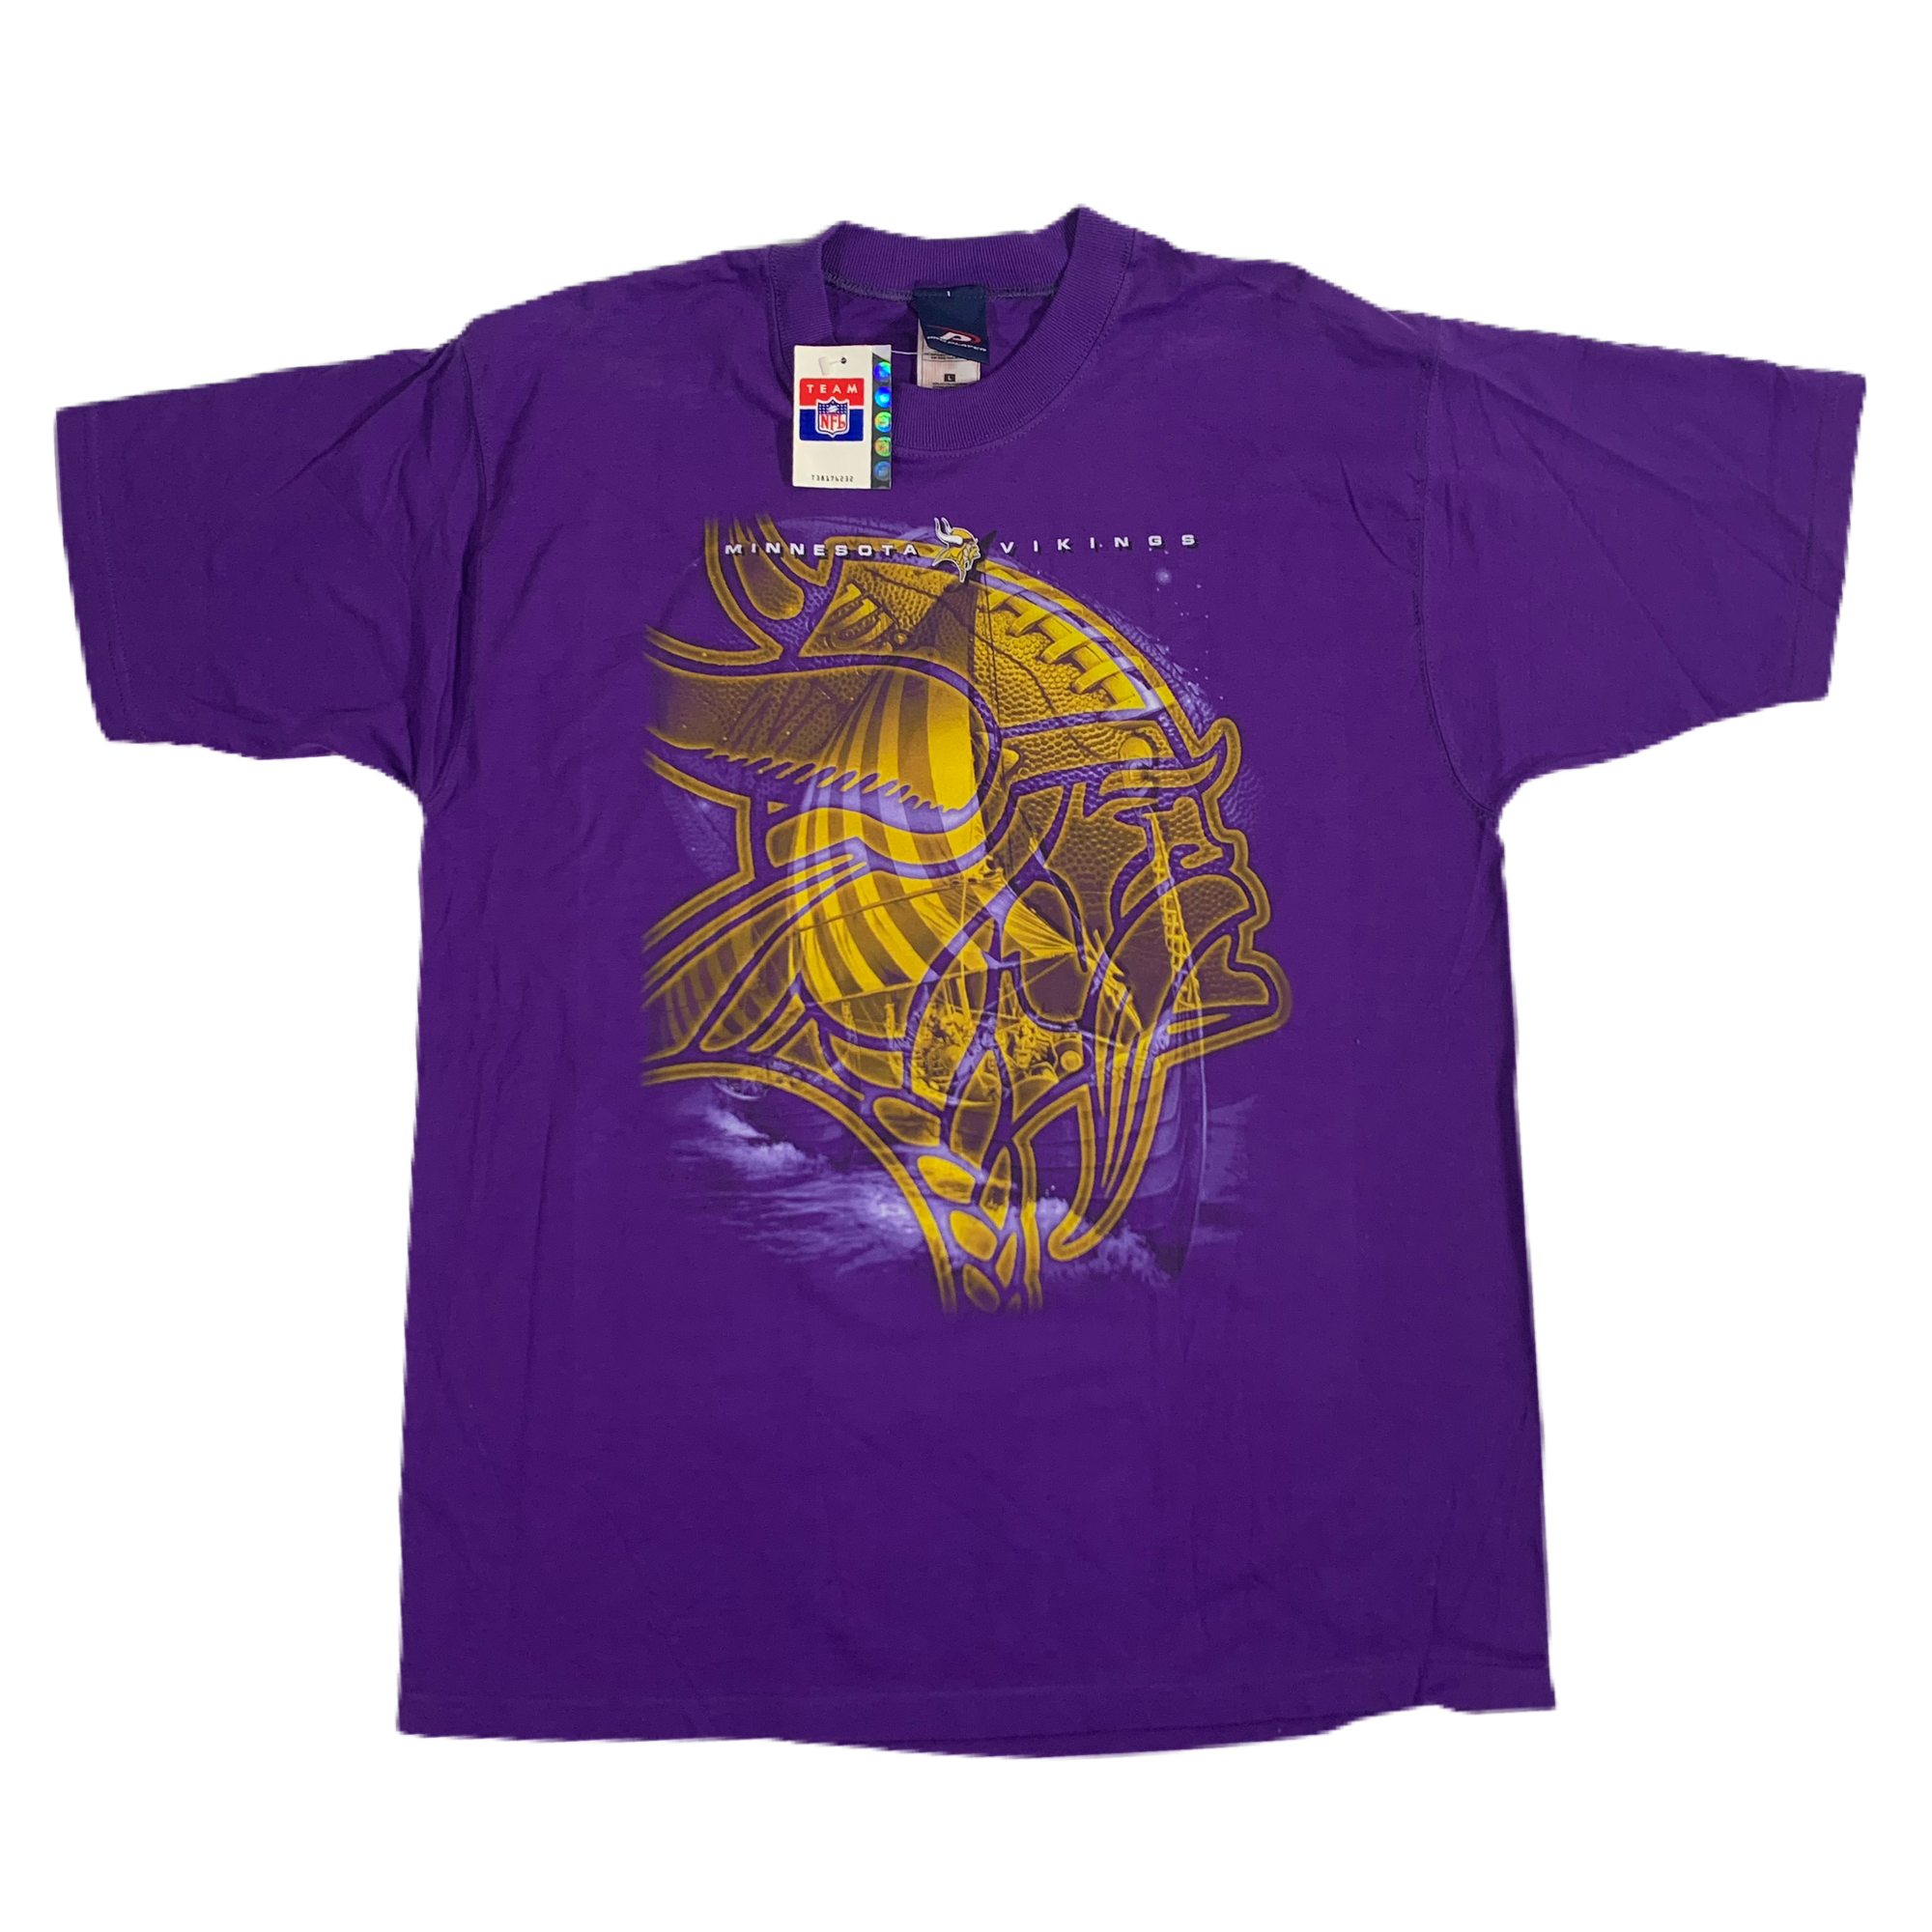 Vintage Minnesota Vikings “NFL” T-Shirt - jointcustodydc